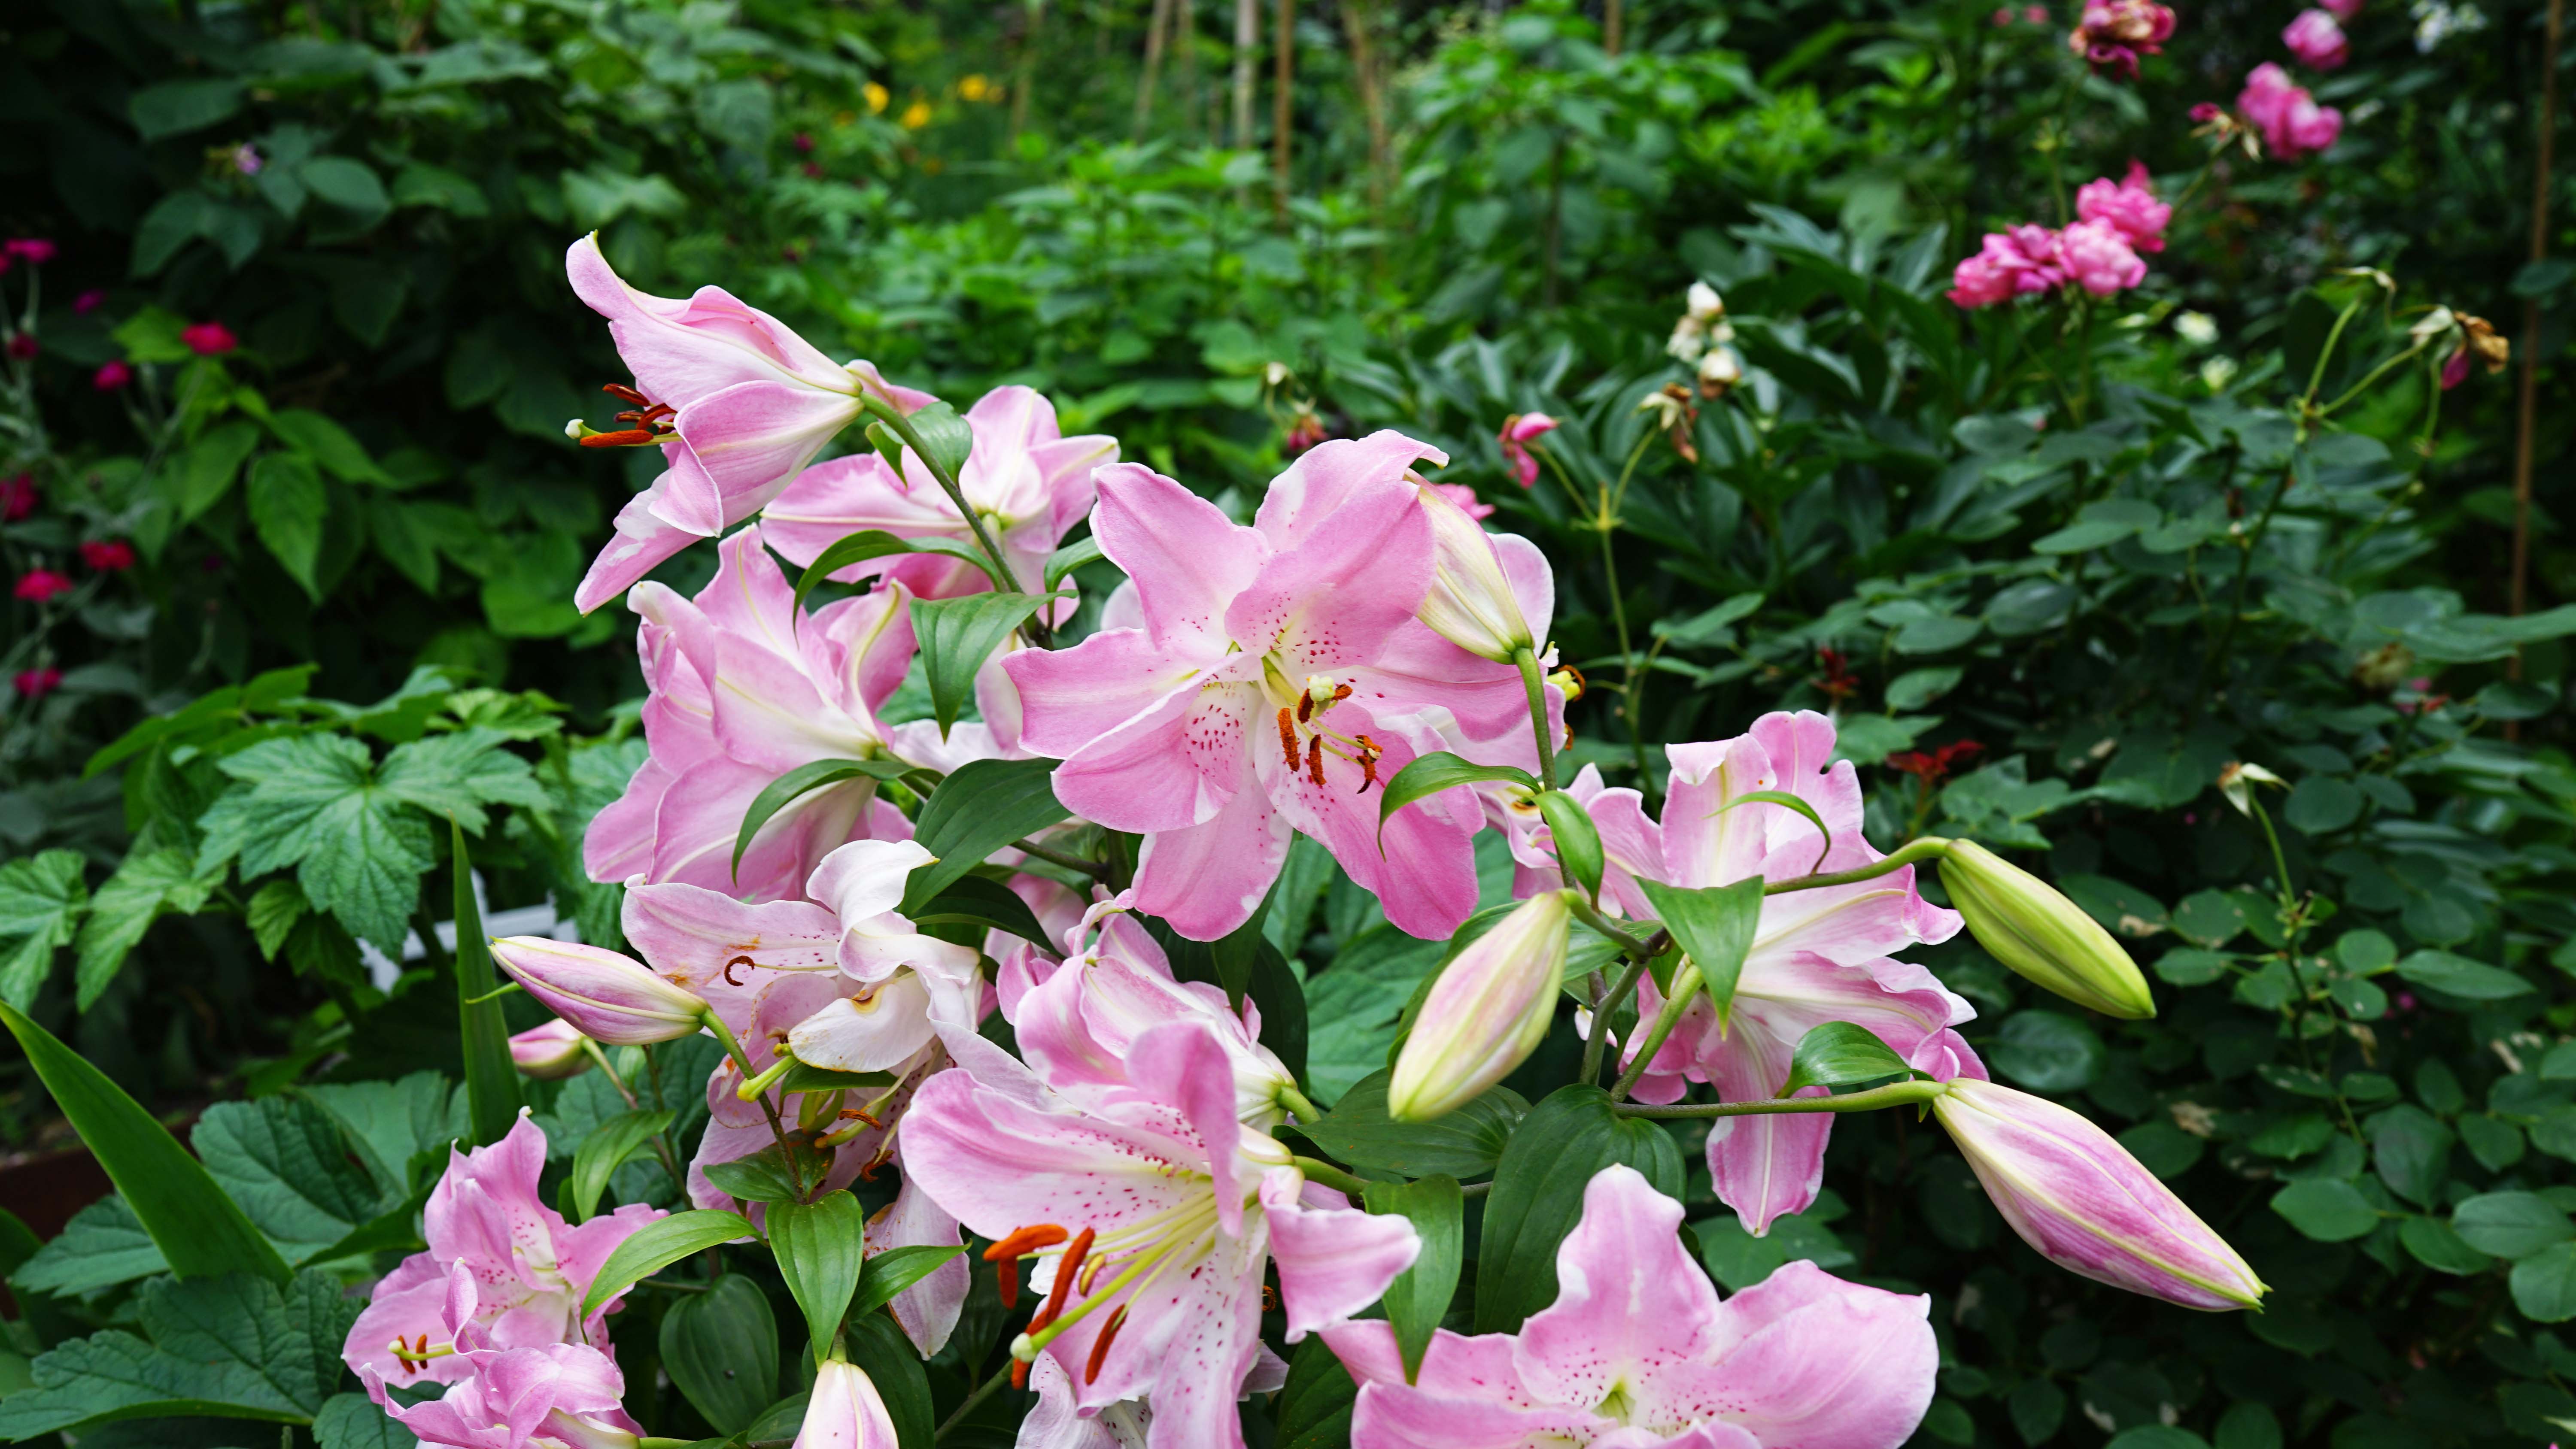 Garden pink lily